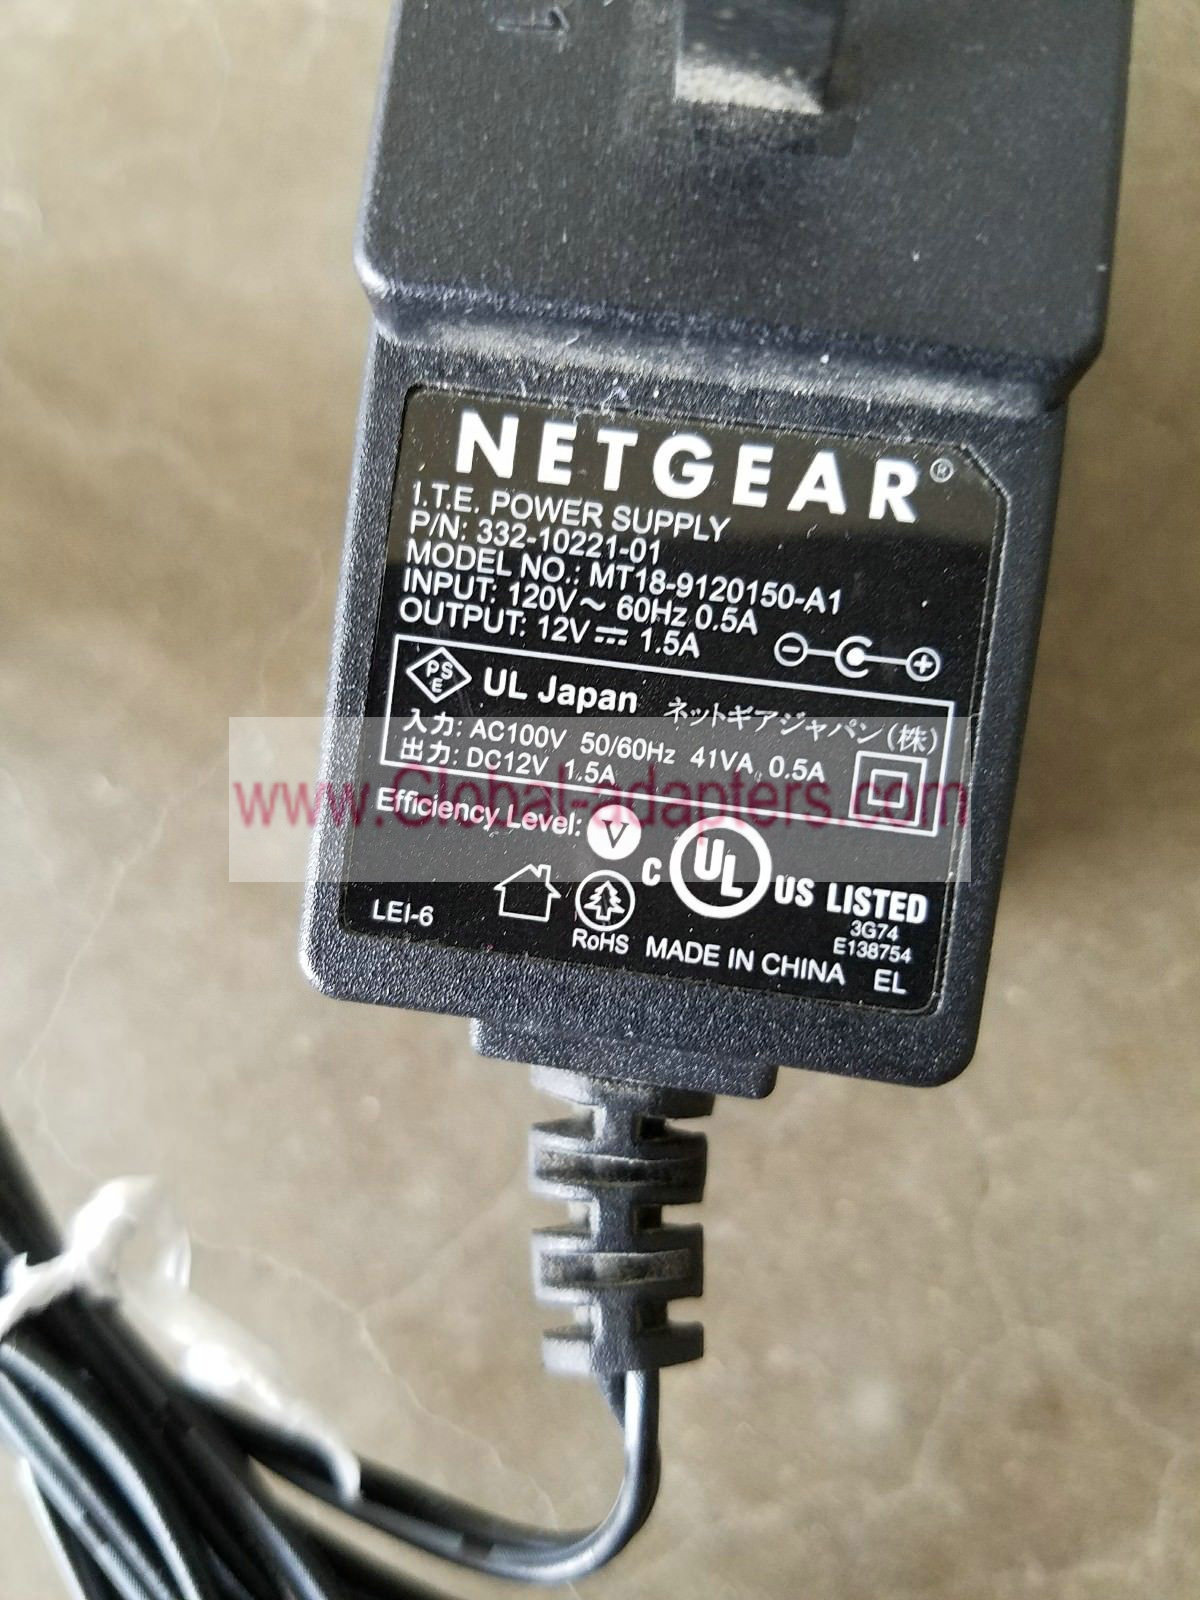 New Netgear 332-10221-01 MT18-9120150-A1 Power Supply 12V DC 1.5A ac adpater